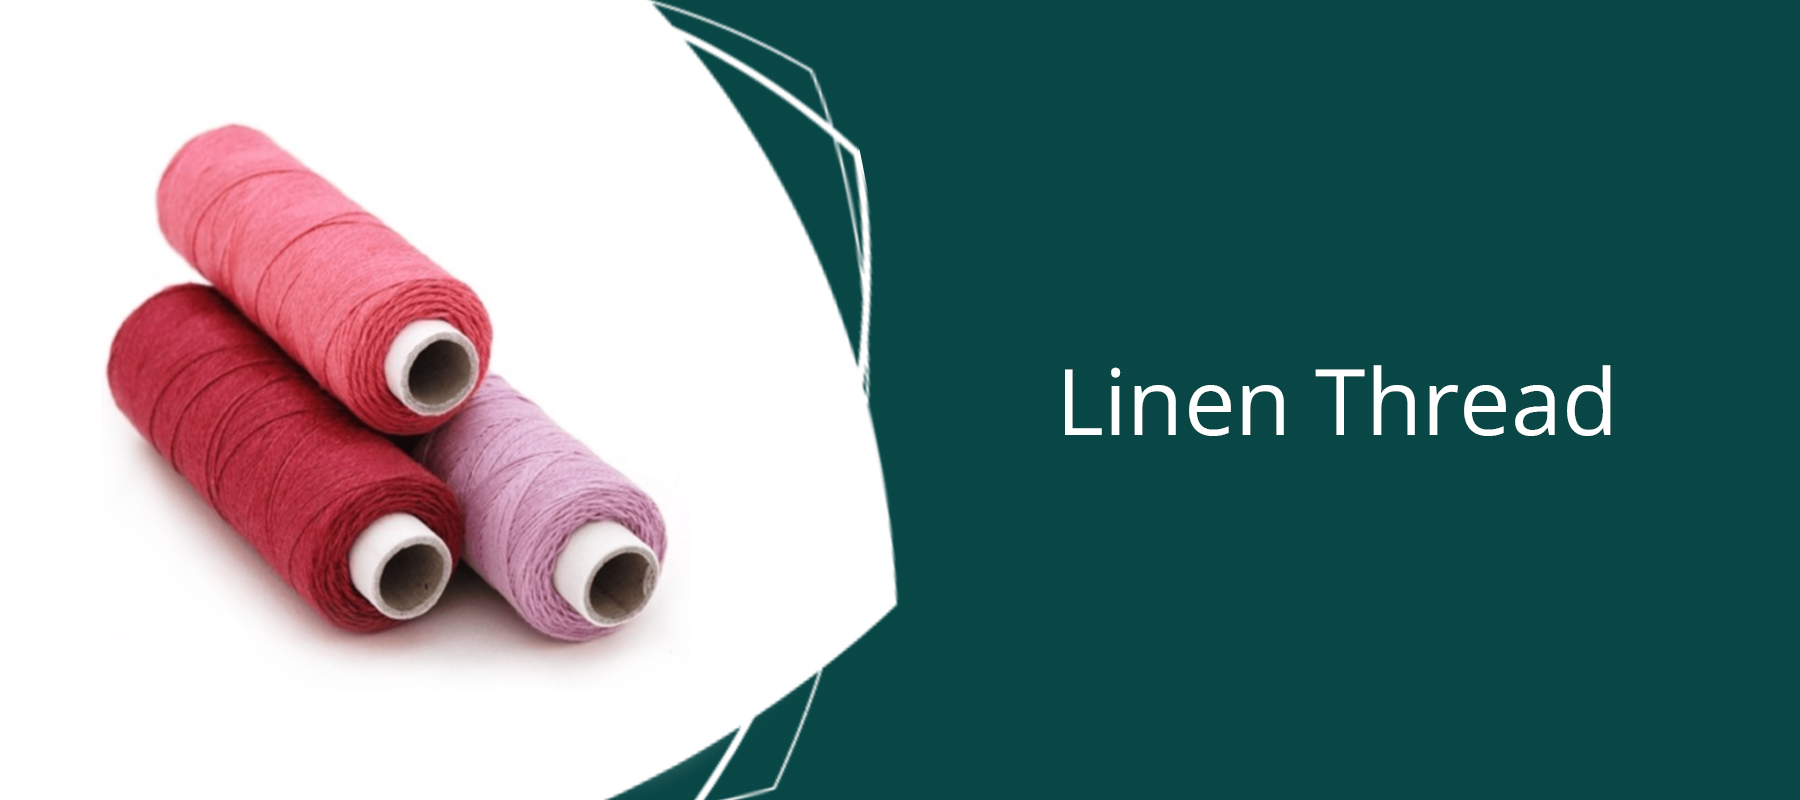 Linen Embroidery Thread Australia: Needlecraft Made Easy